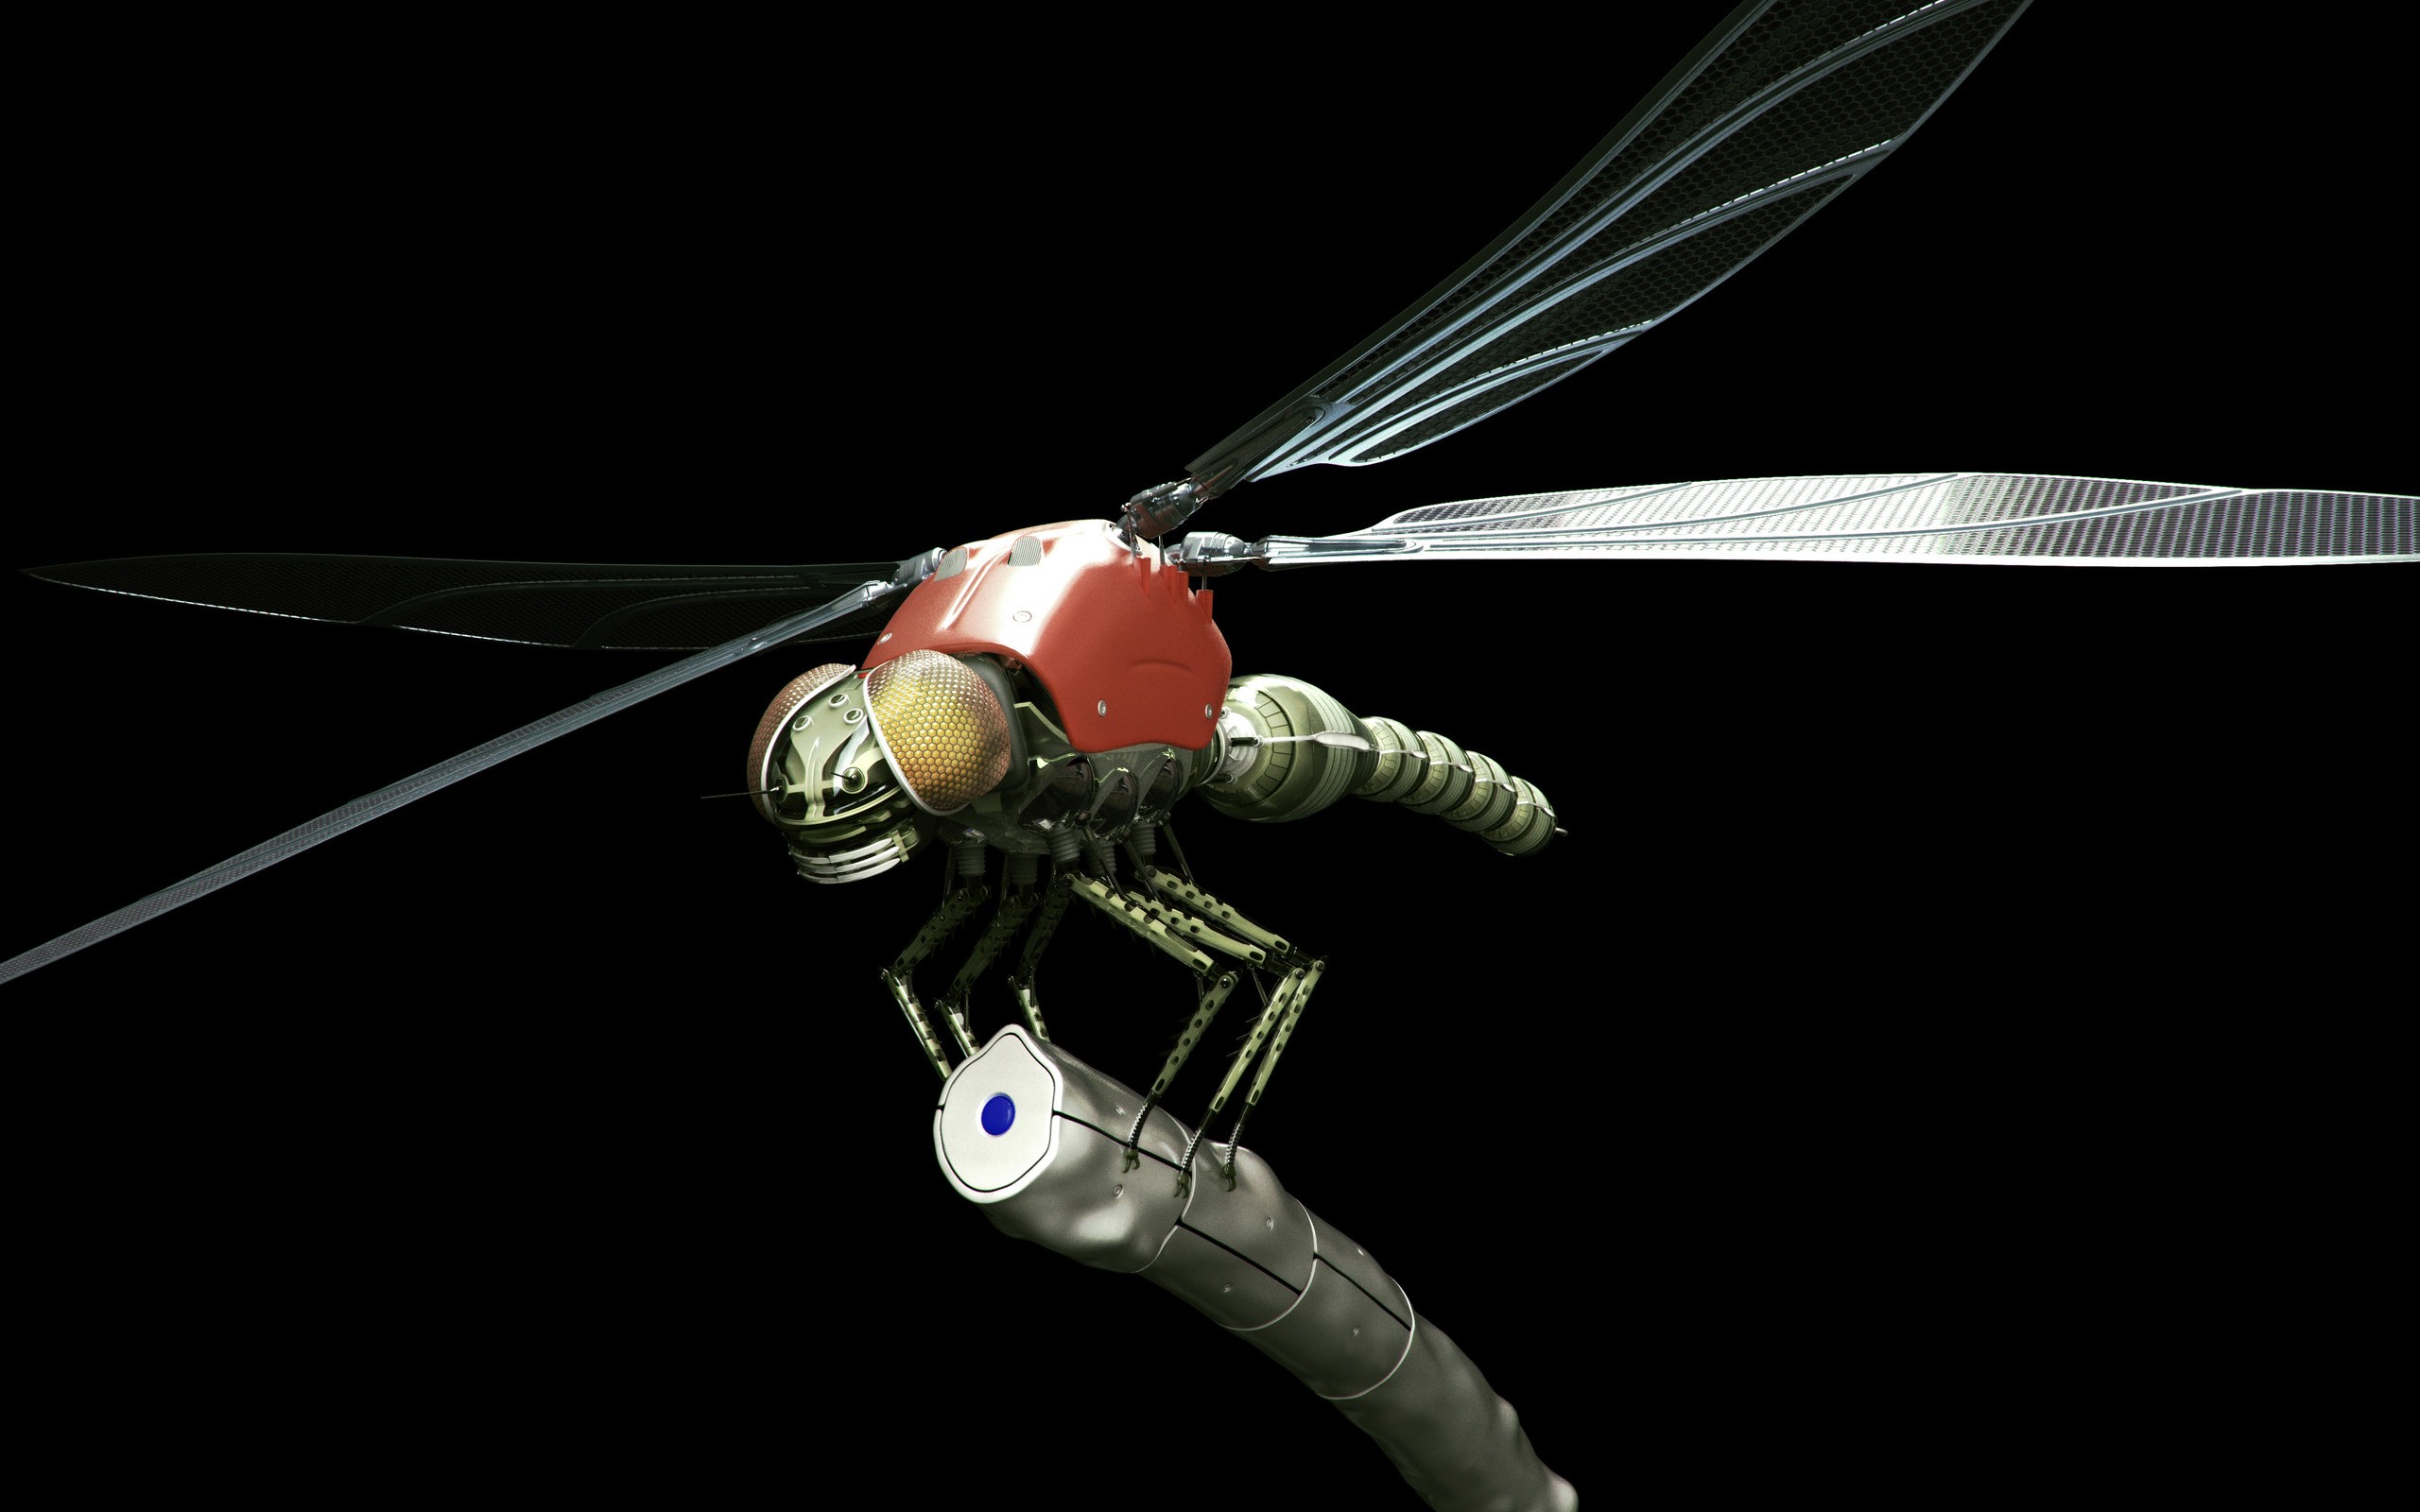 General 2560x1600 dragonflies robot CGI black background simple background machine